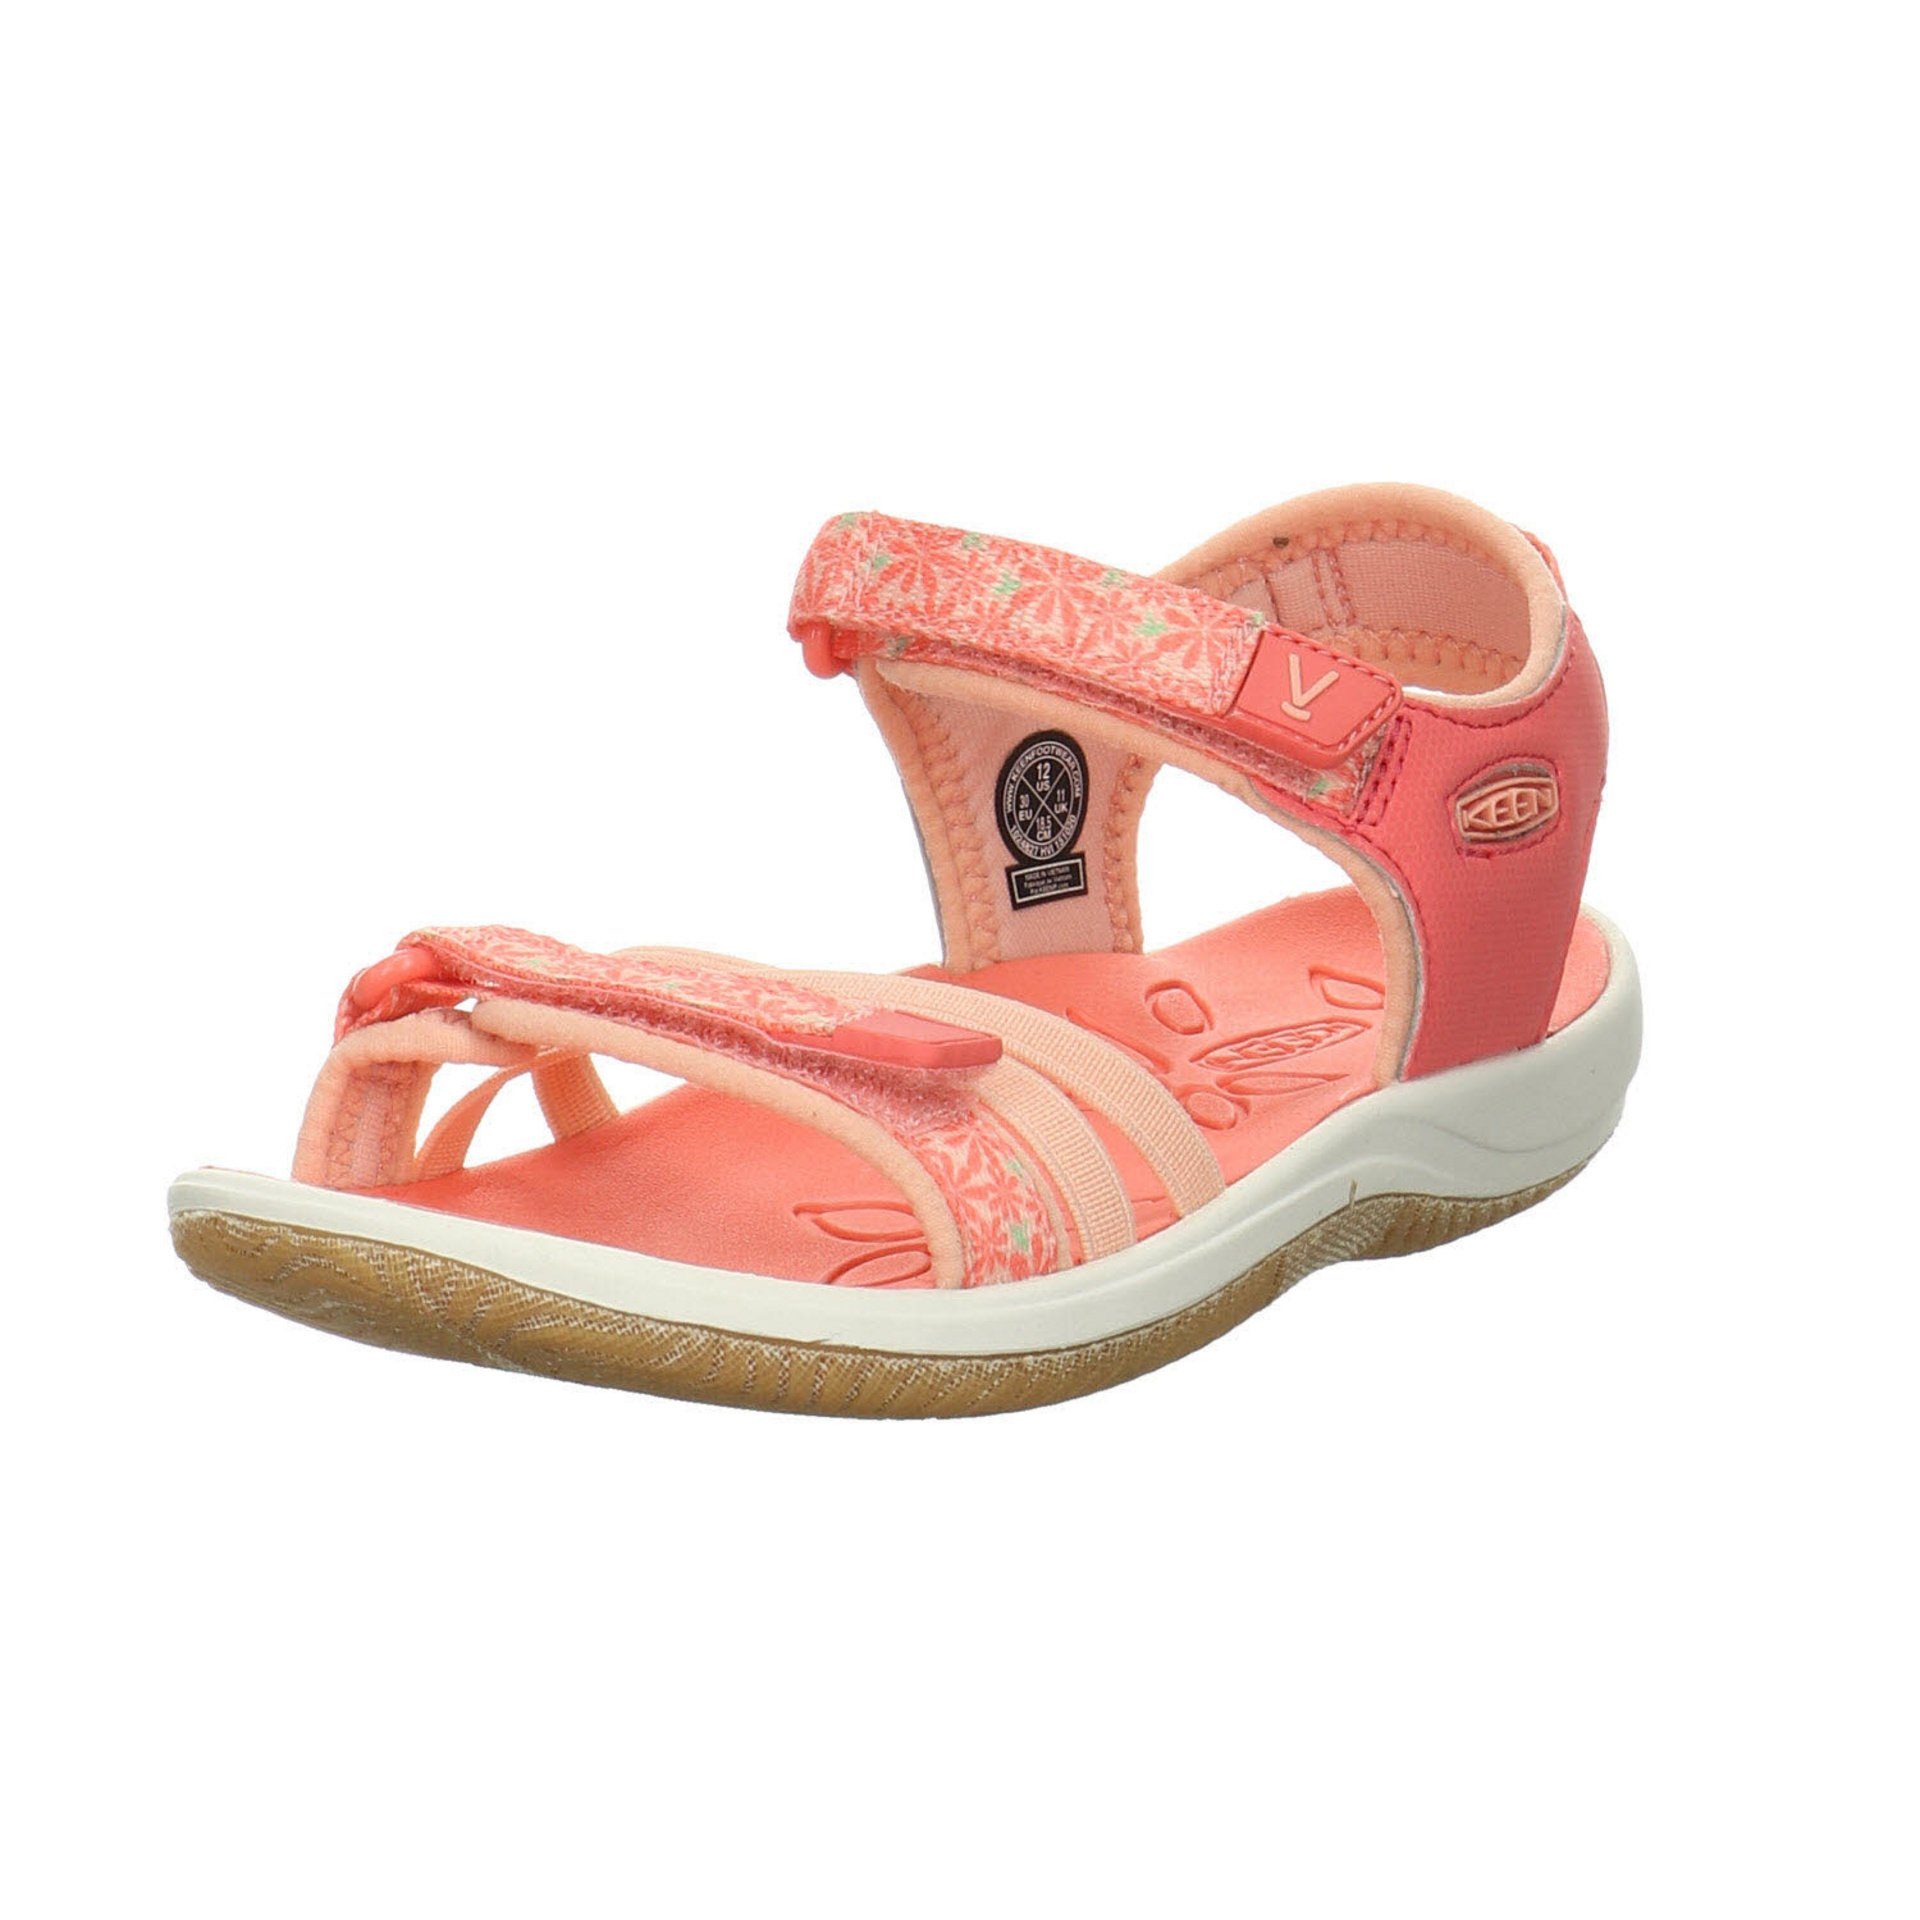 Keen Mädchen Sandalen Schuhe Verano Sandale Sandale Textil duabrry peach peral | 